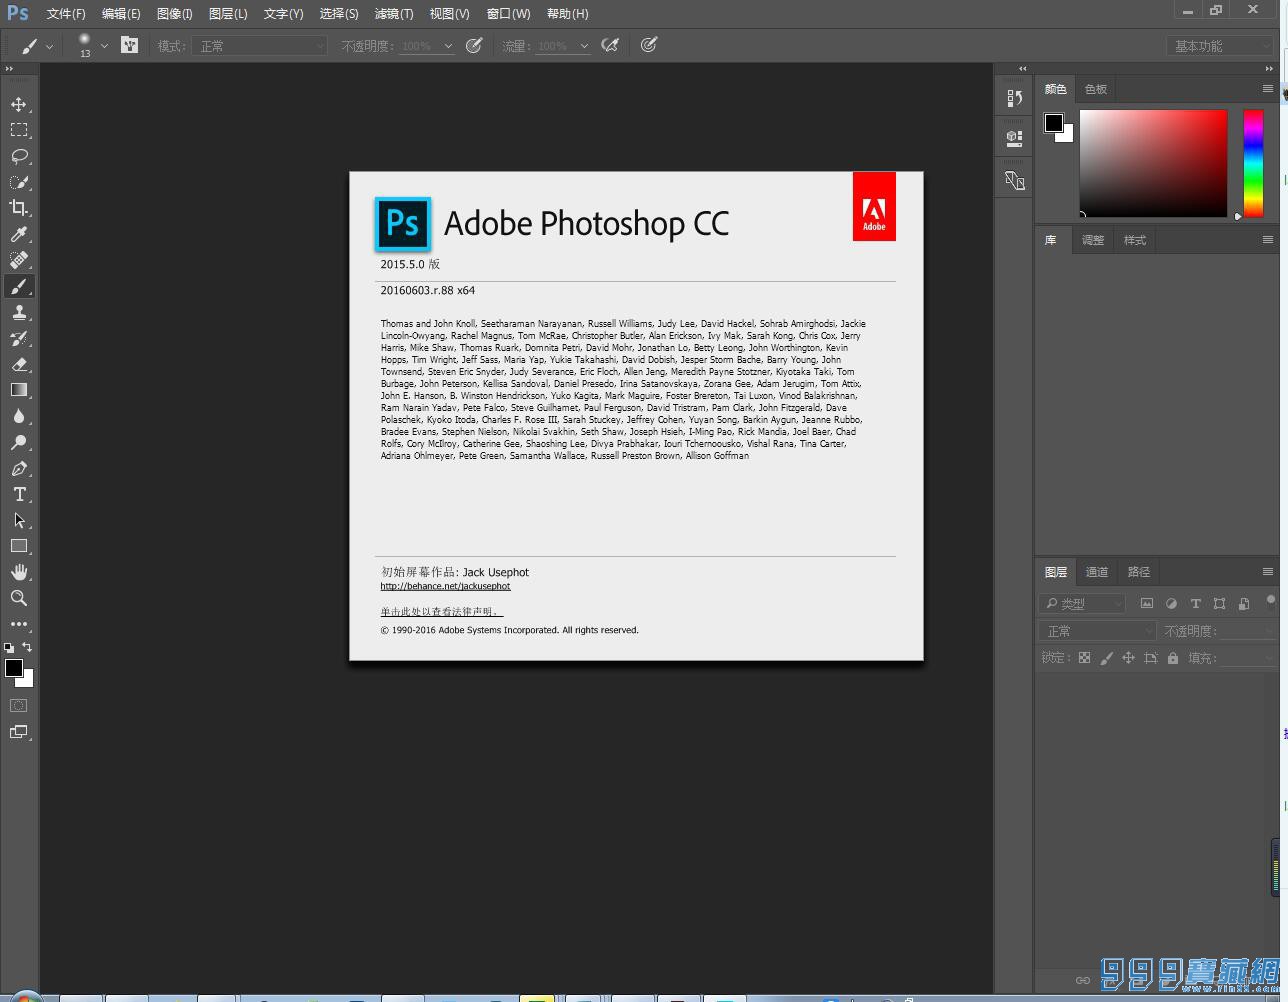 Adobe Photoshop CC 2015.5 & Crack˵